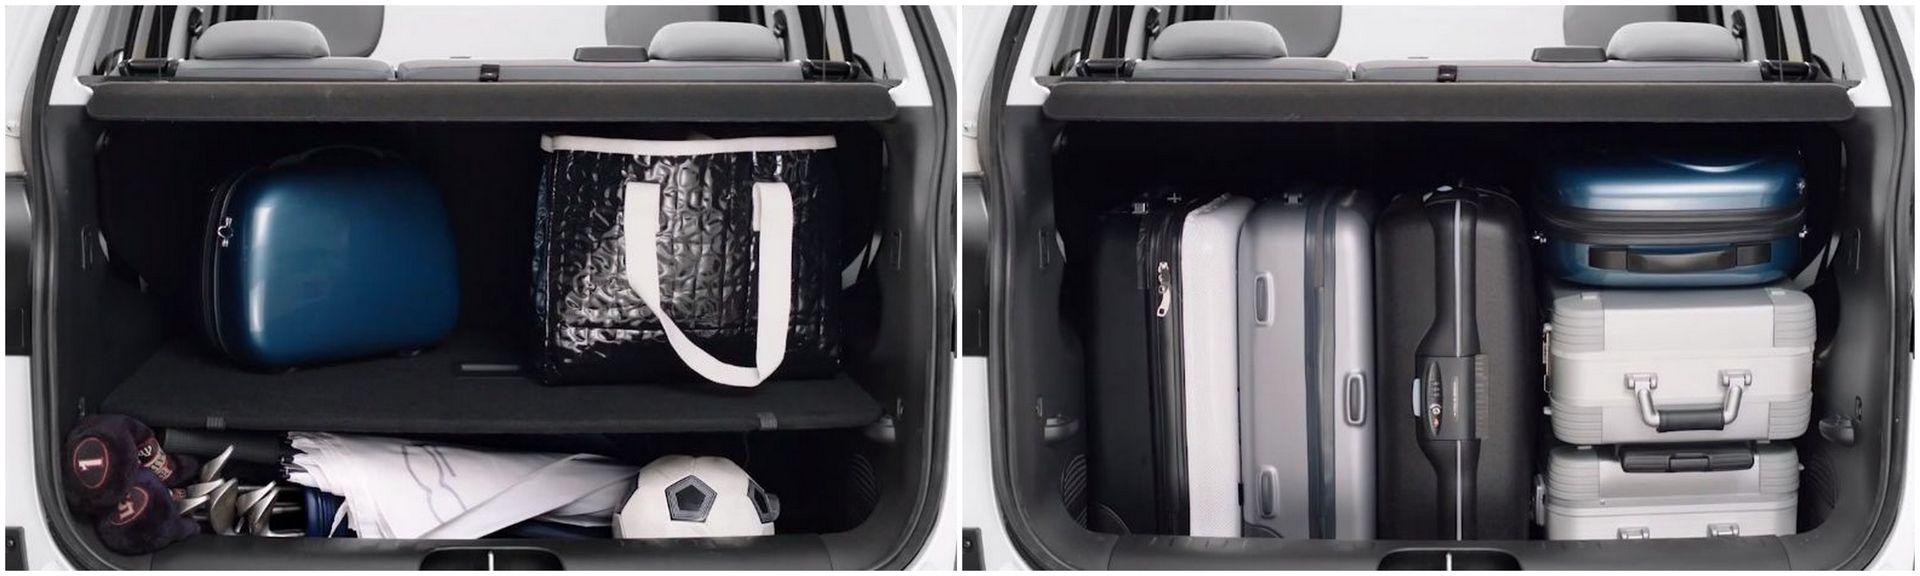 FIAT 500L — багажник, фотоколлаж